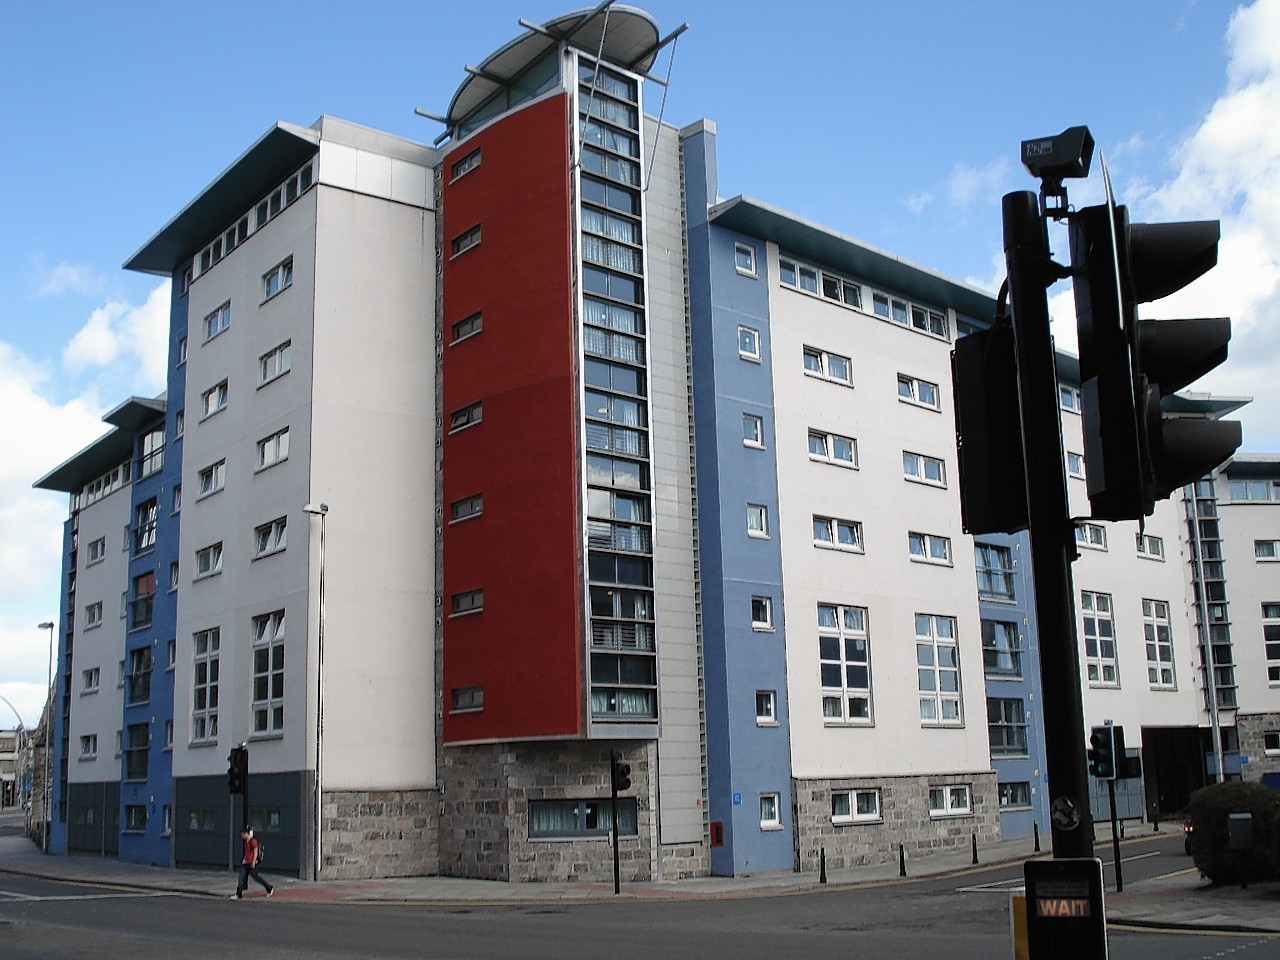 The Mealmarket student flats in Aberdeen